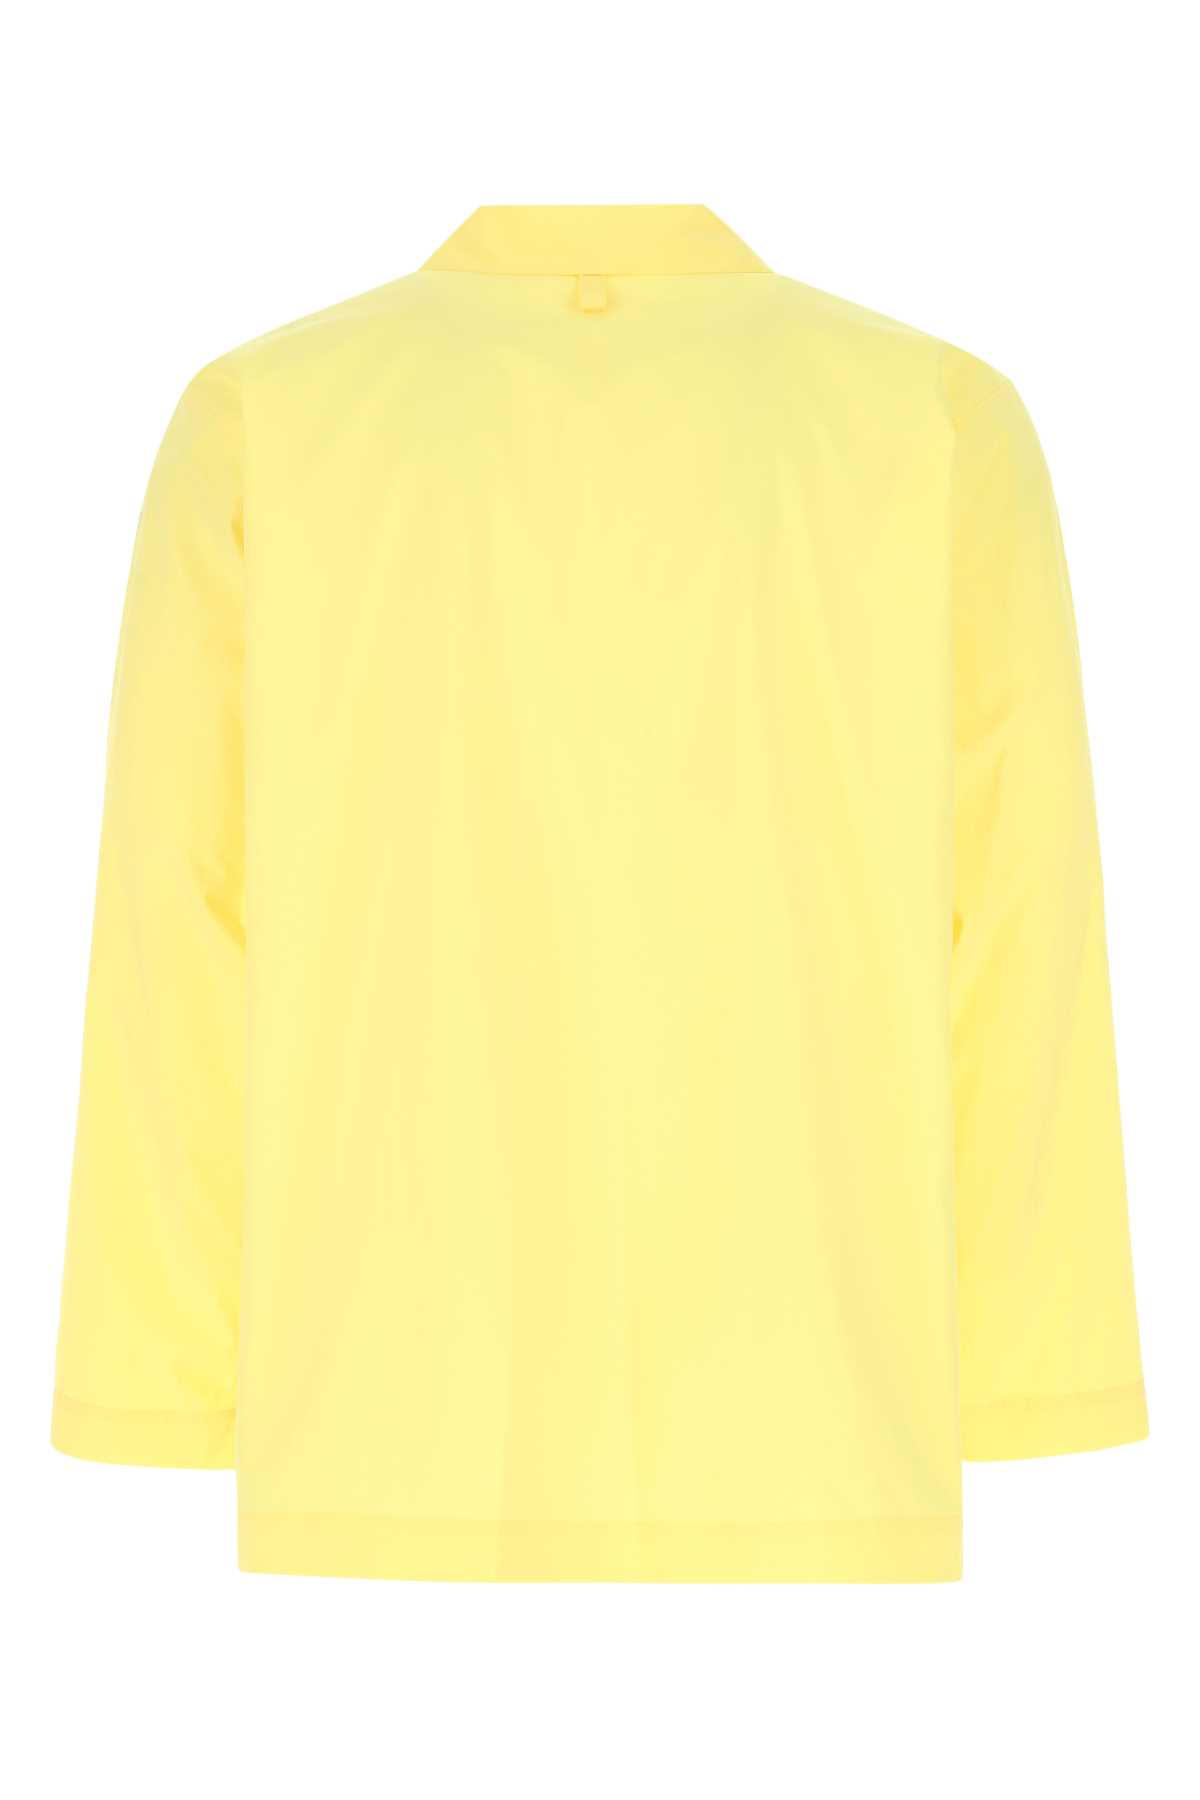 Issey Miyake Yellow Polyester Shirt In 52